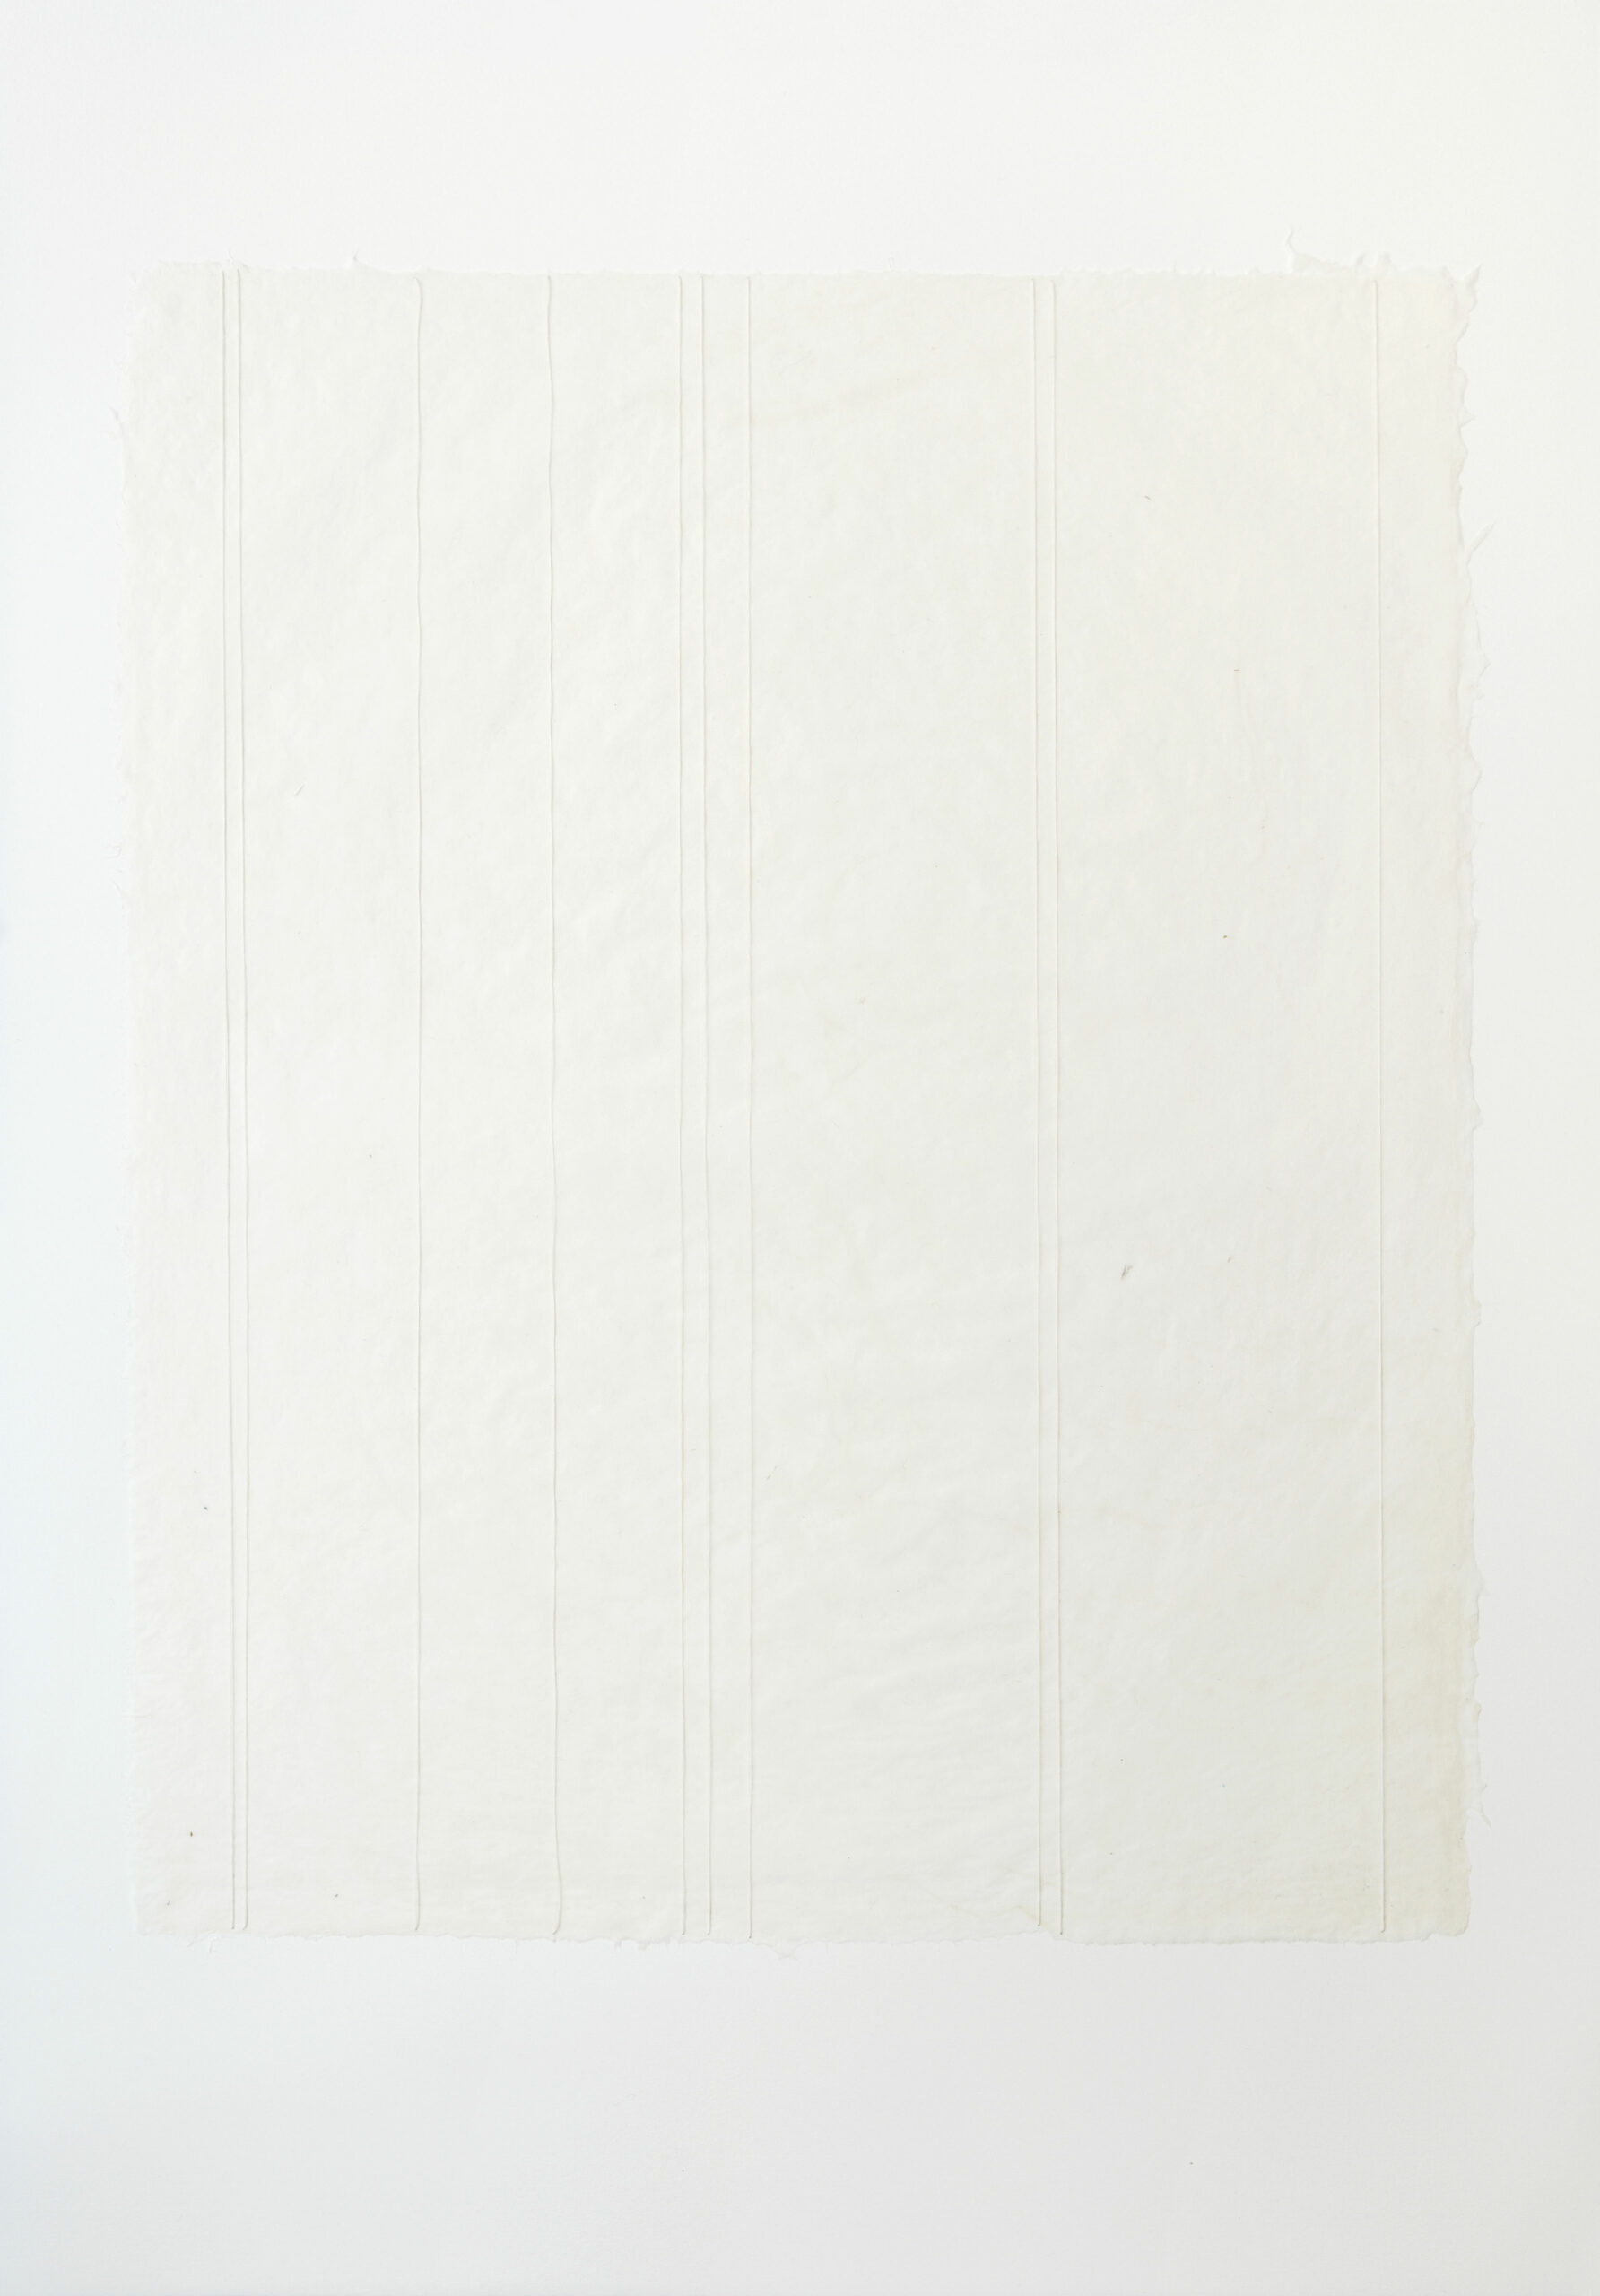 Miriam Salamander, thread lines on handmade white paper